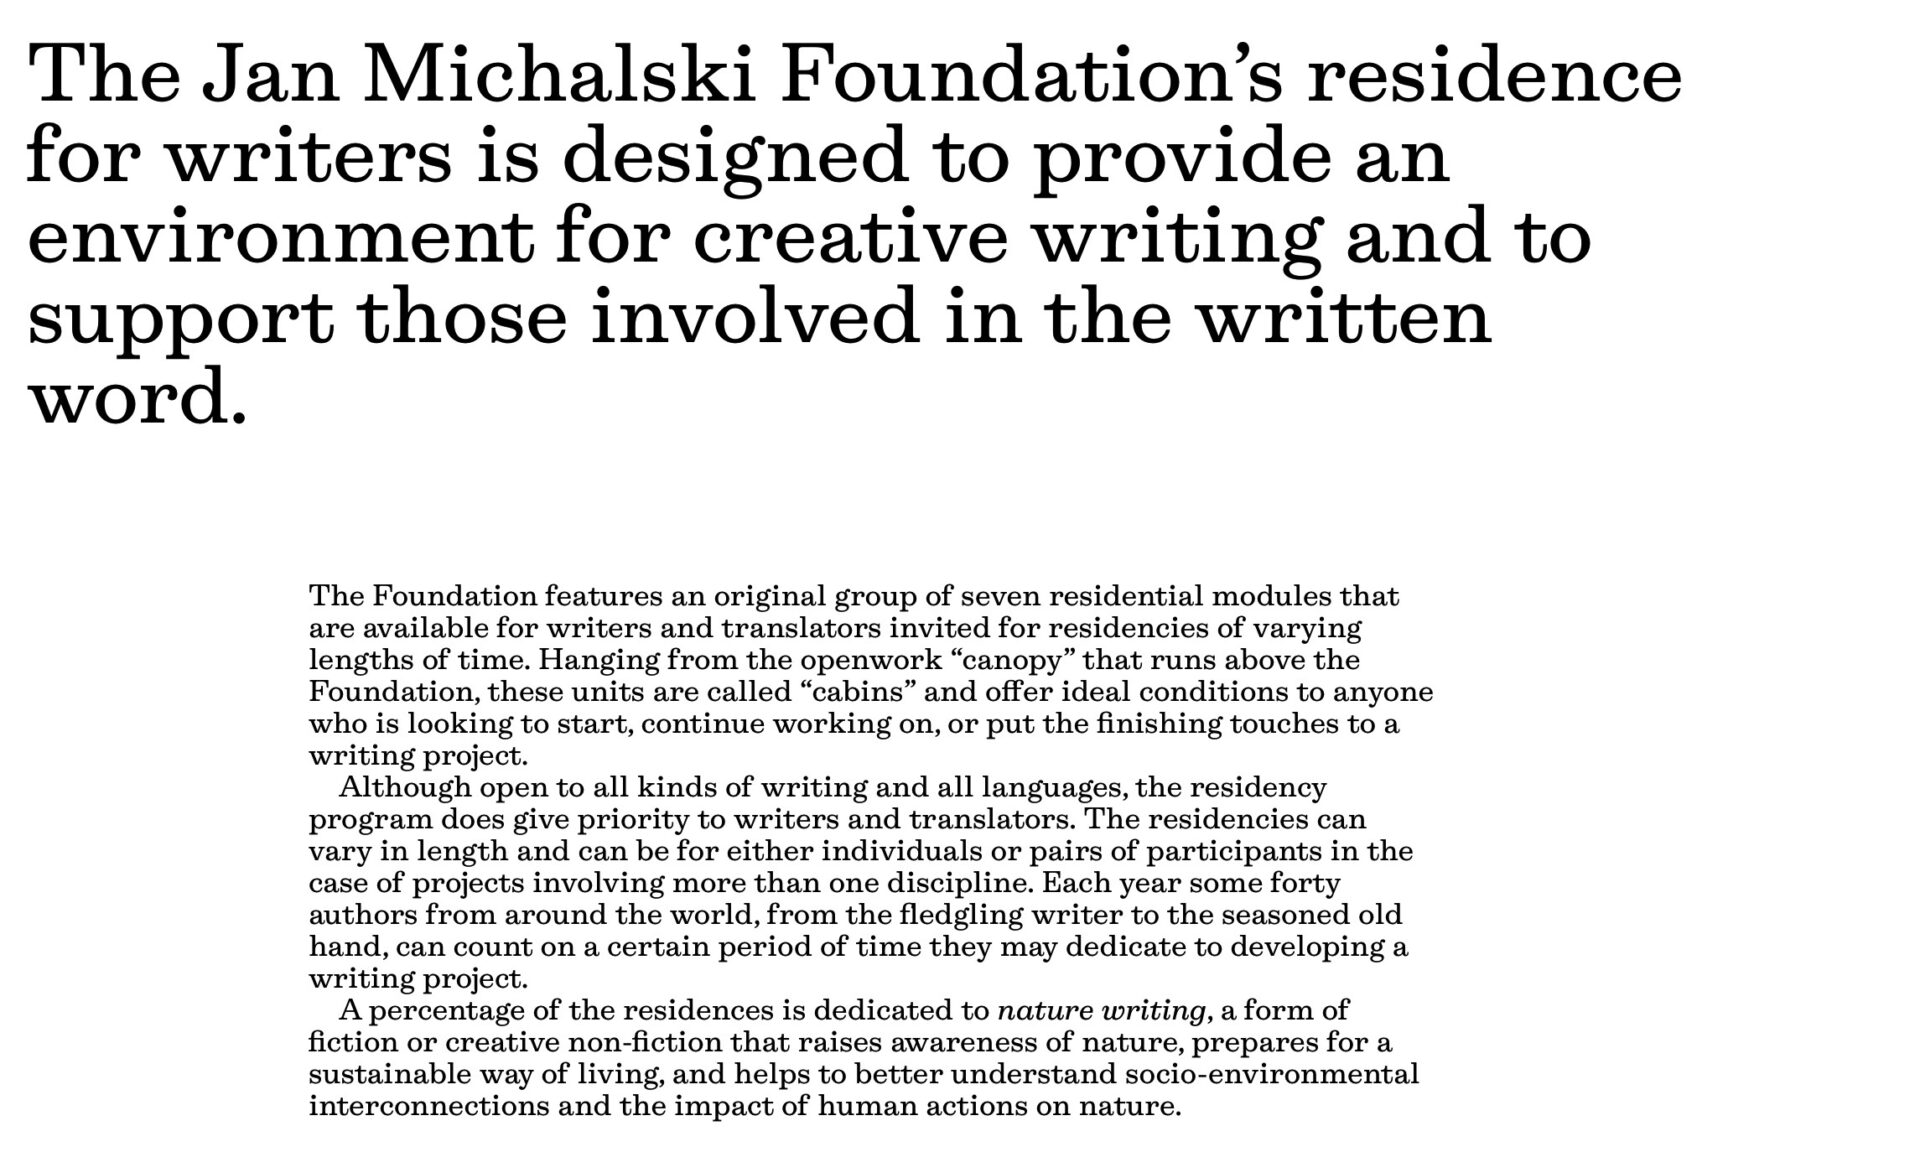 For more information regarding Jan Michalski Foundation: https://fondation-janmichalski.com/en